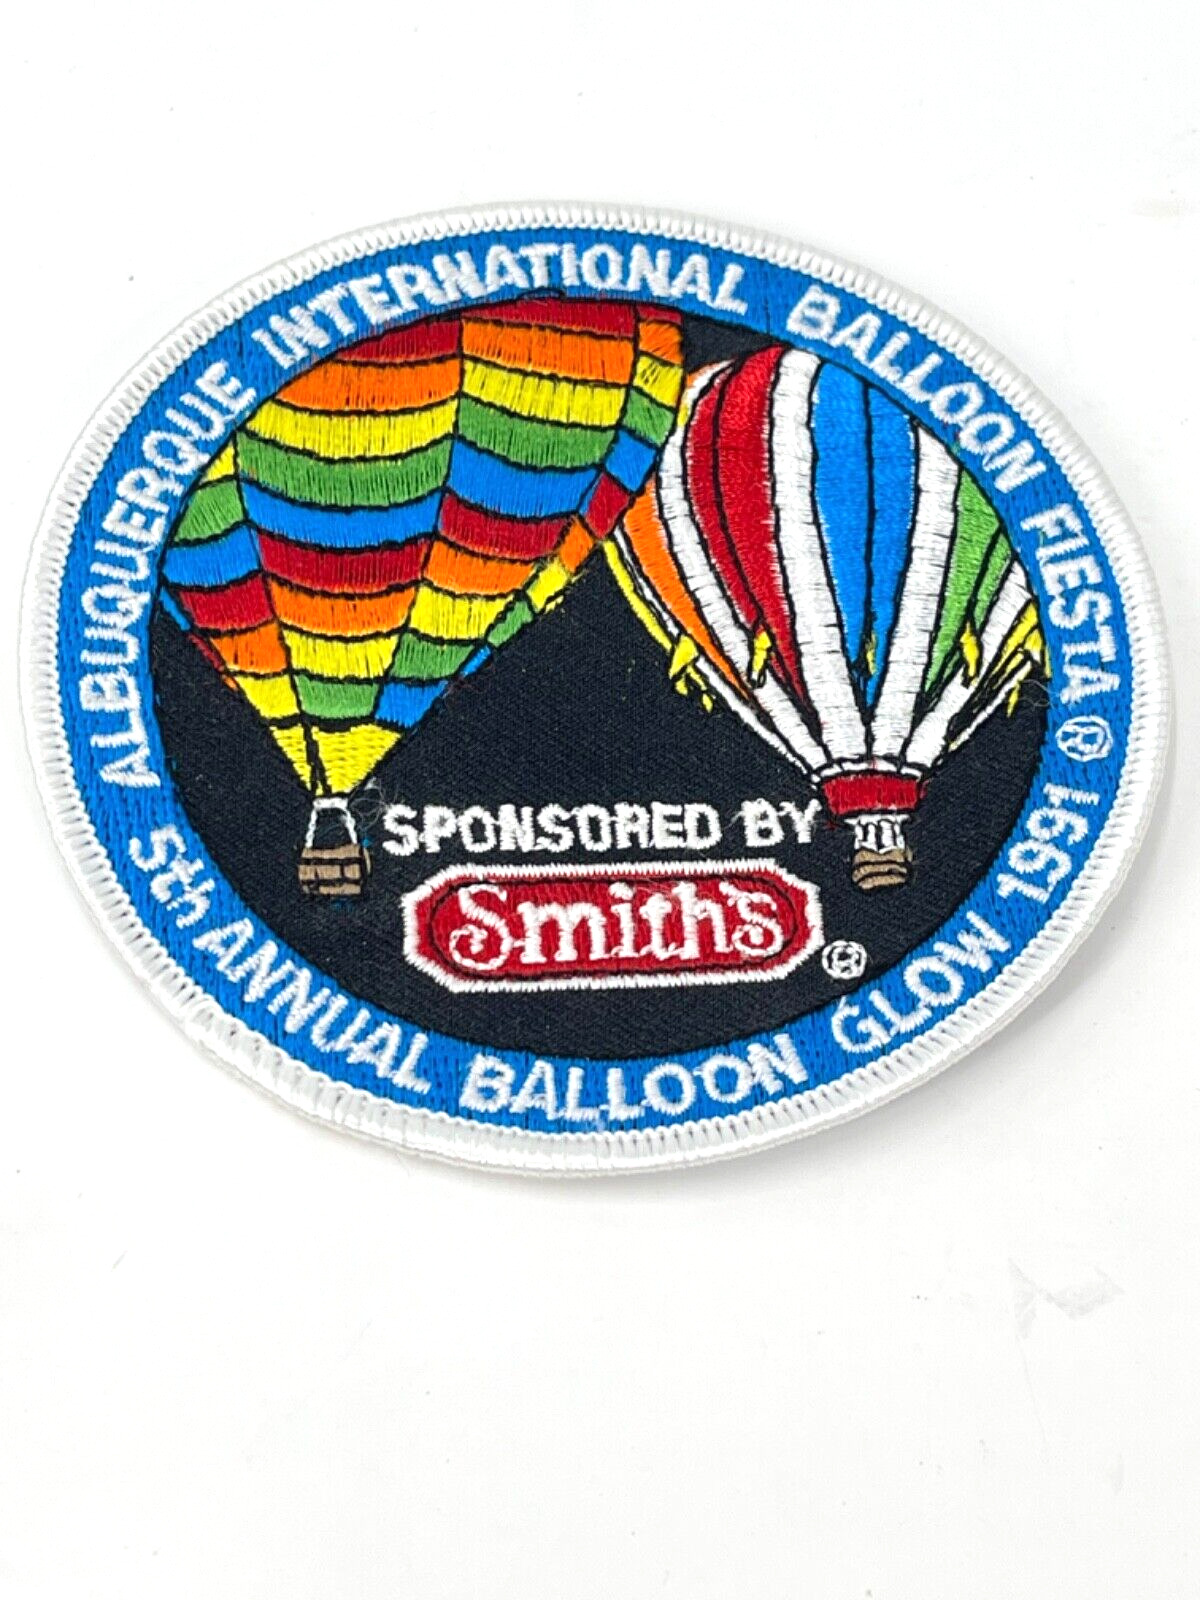 1991 Albuquerque Hot Air Balloon Glow Fiesta Official Event Patch ABQ NM